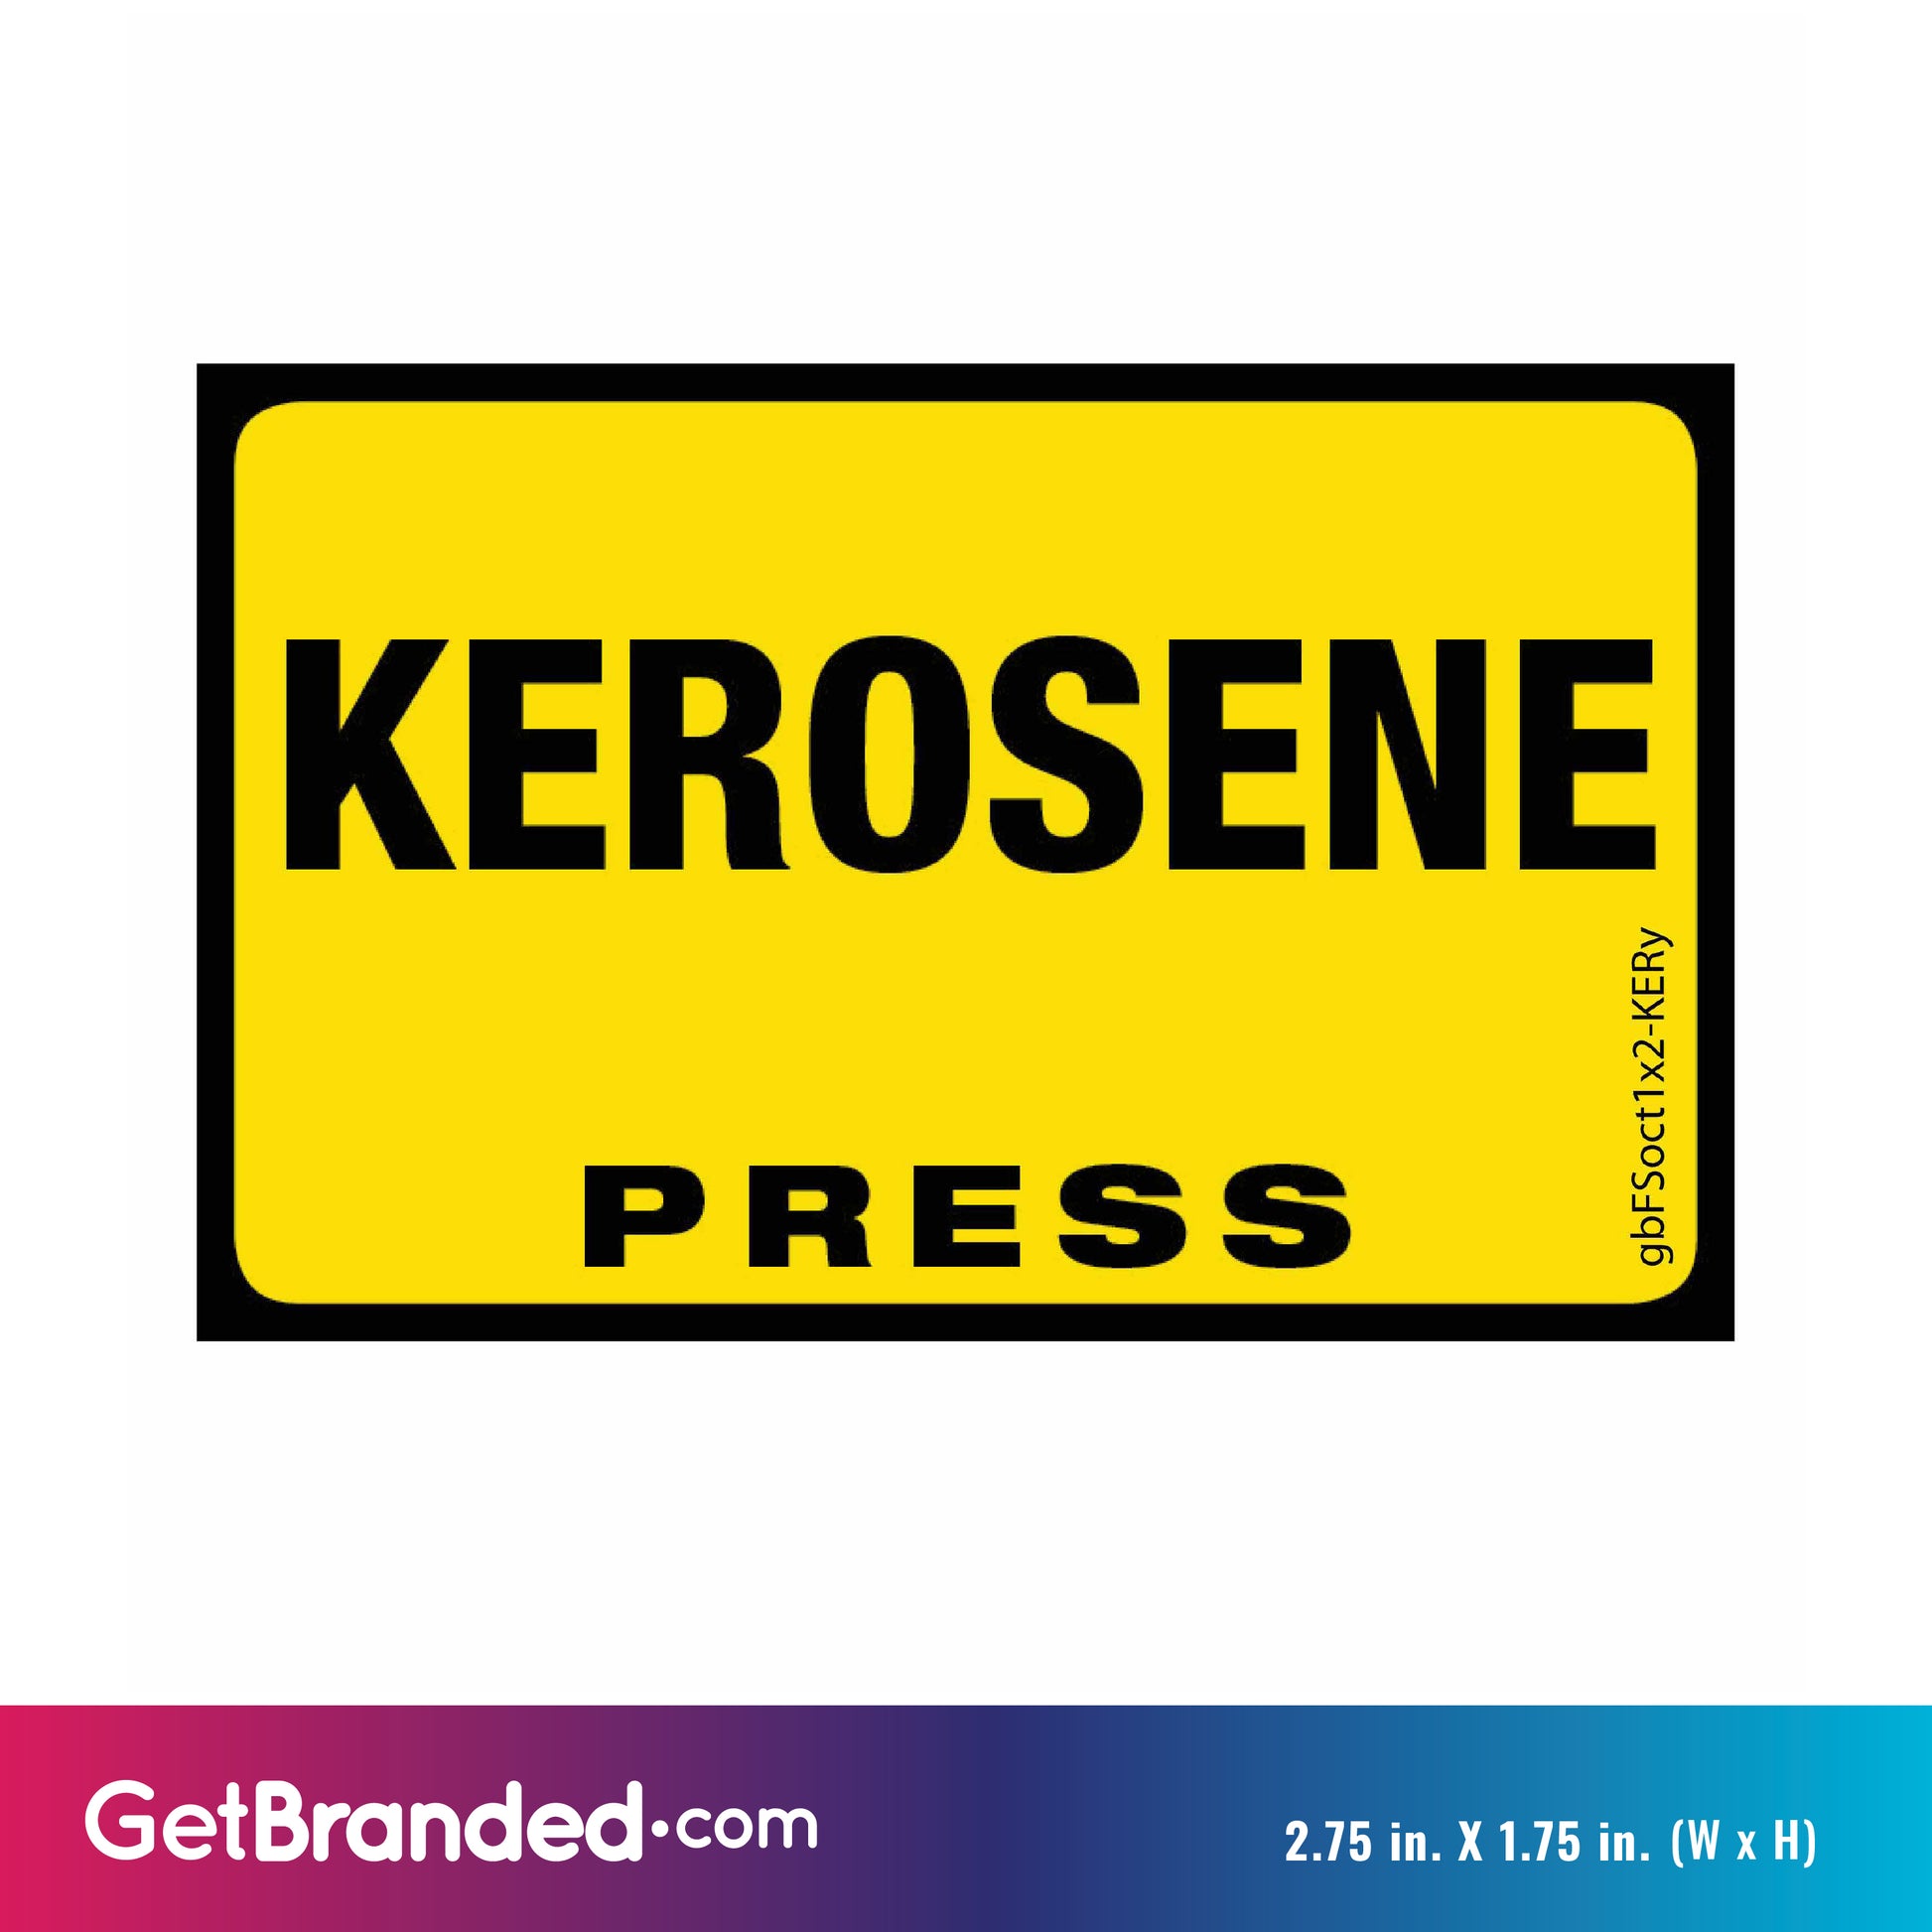 Kerosene Press Octane Rating Decal, Yellow size guide.